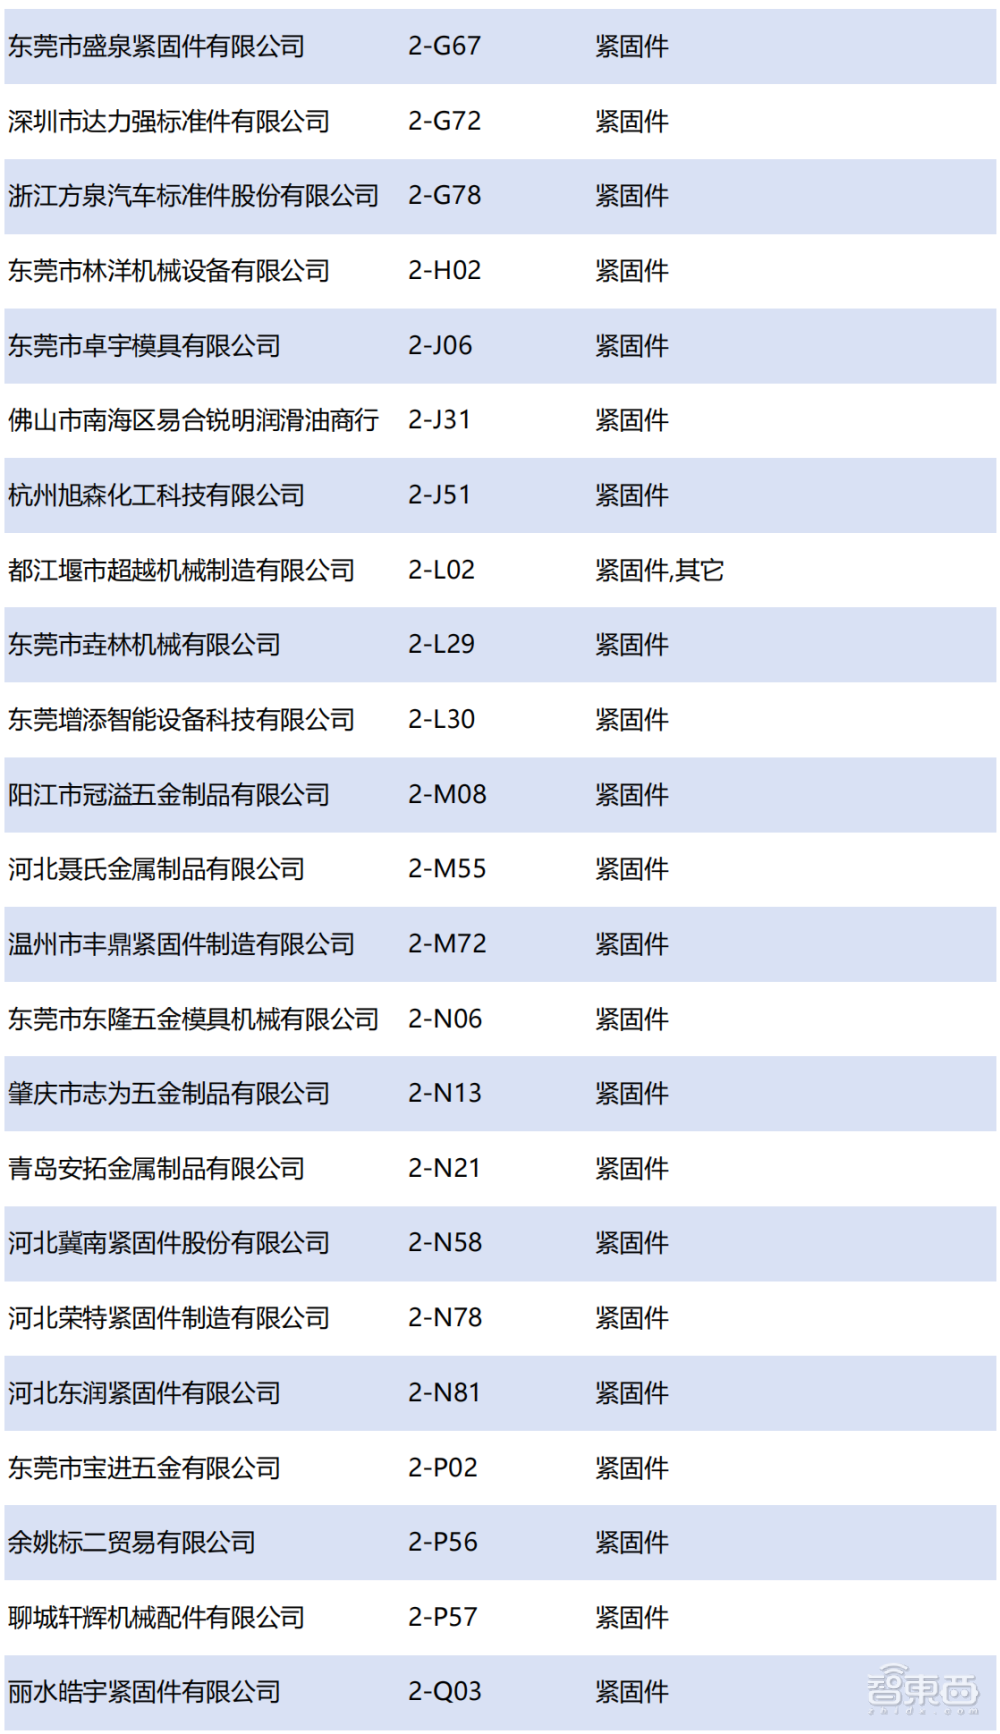 ITES深圳工业展展商名录公布！3月28日-31日深圳国际会展中心（宝安）举行